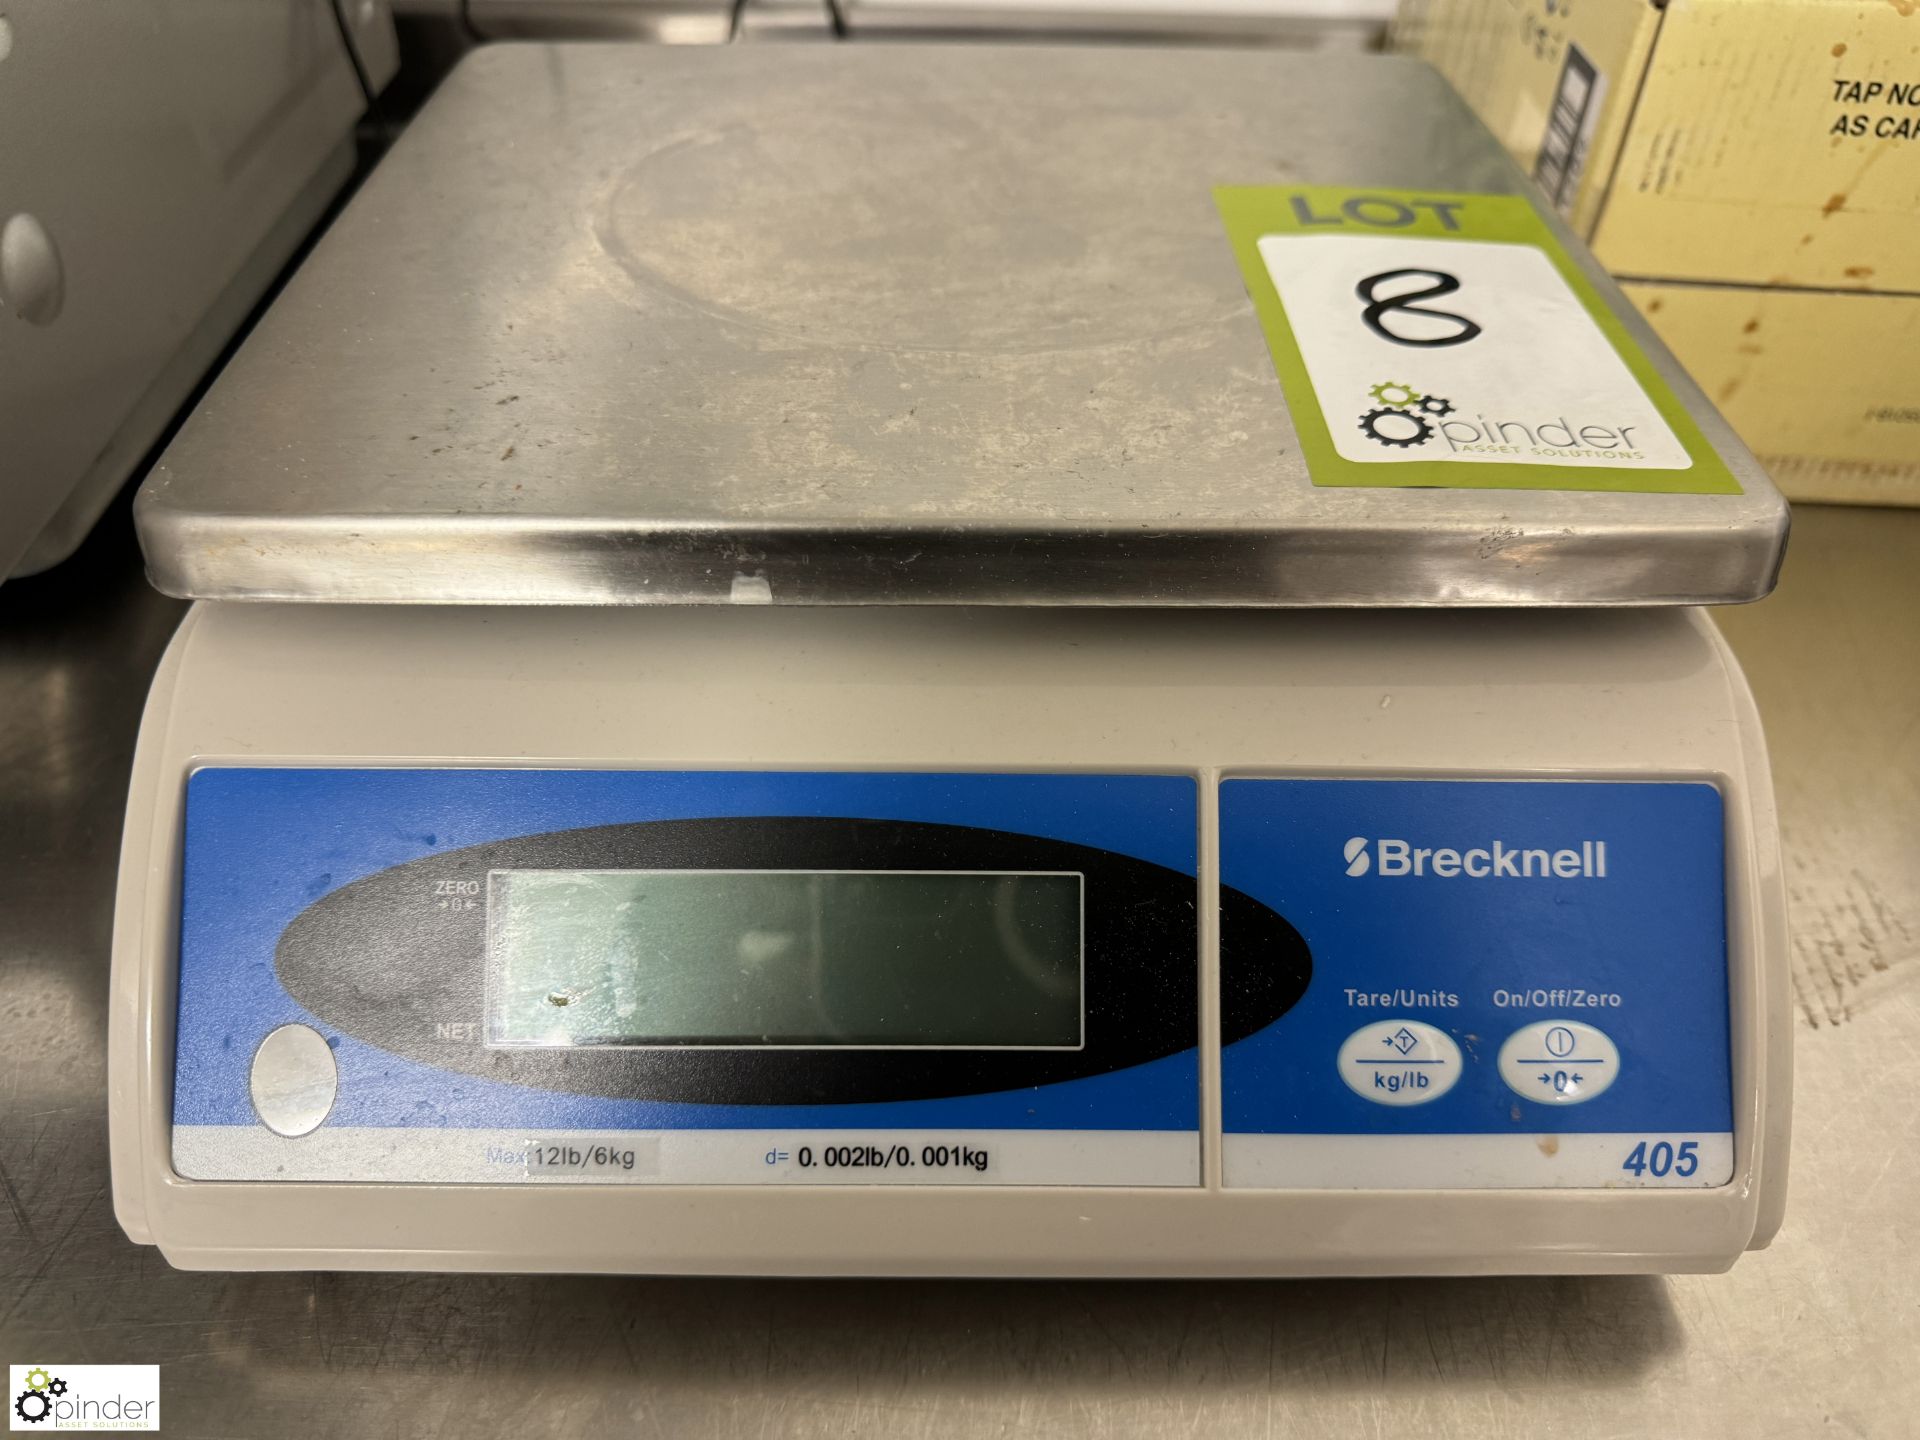 Brecknall 405 Digital Weigh Scales, 6kg x 0.001kg, 240volts (location in building – basement kitchen